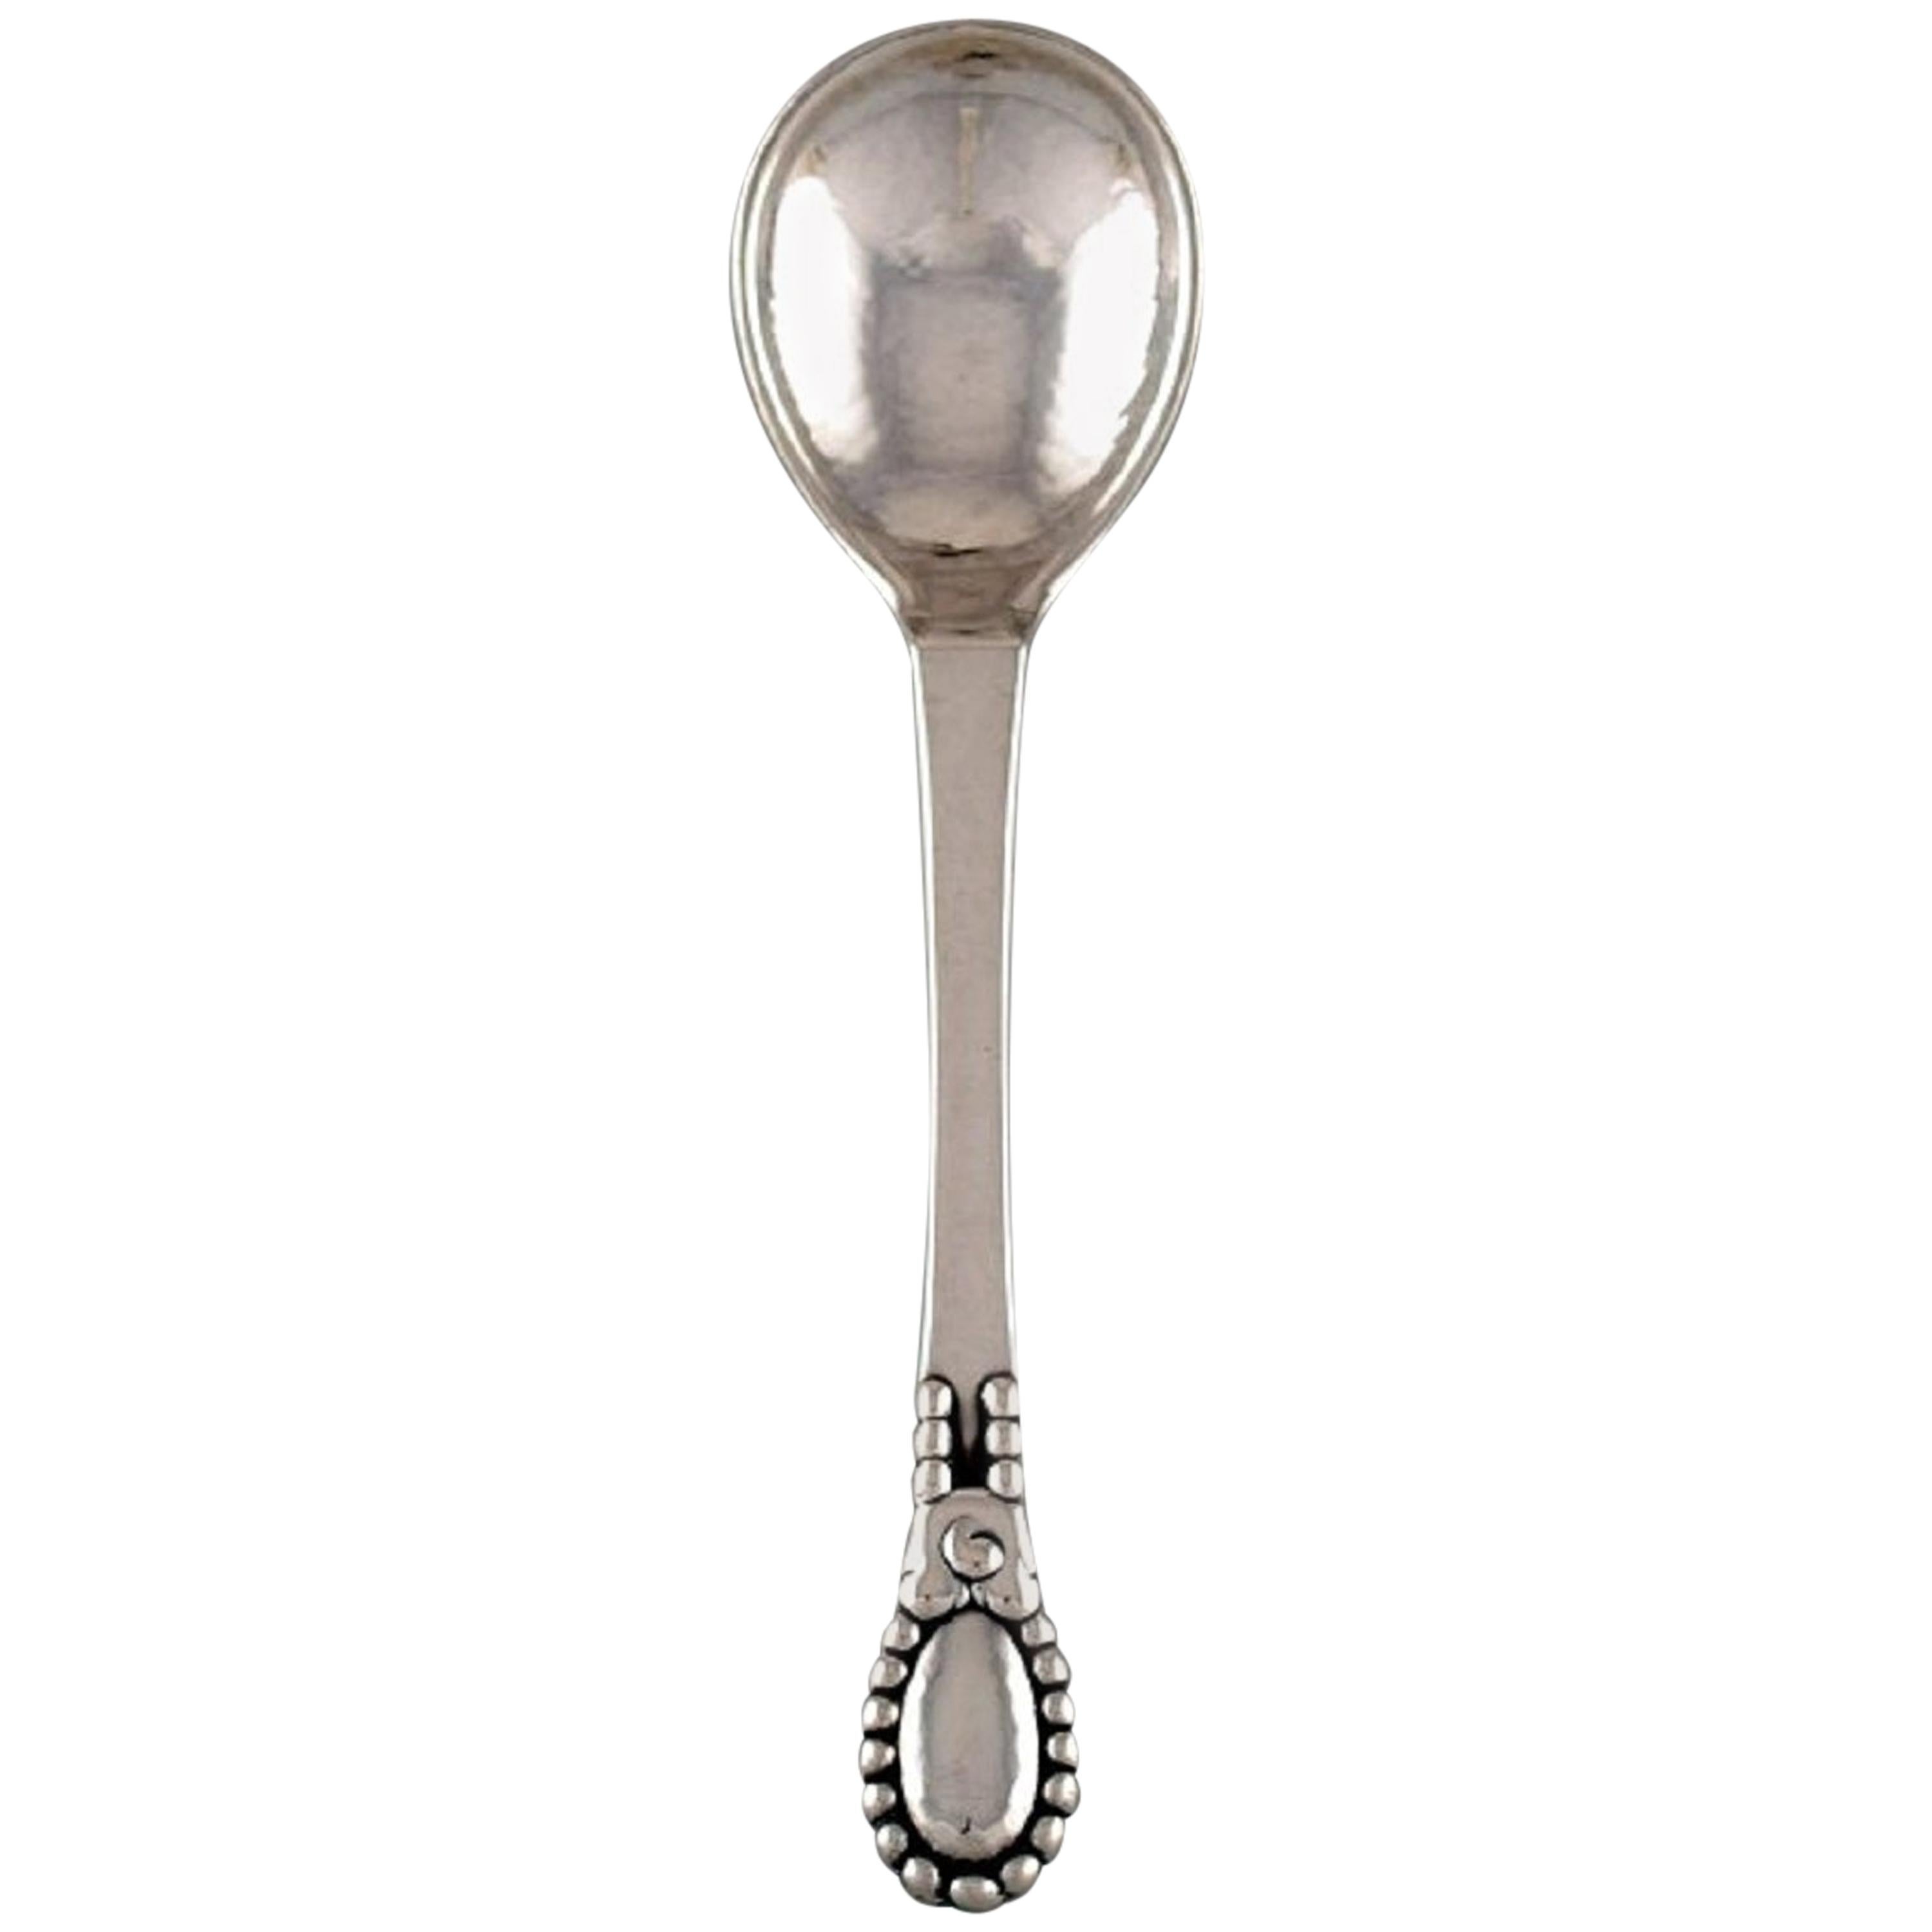 Evald Nielsen Number 13 Jam Spoon in Hammered Silver, 830, Dated 1924